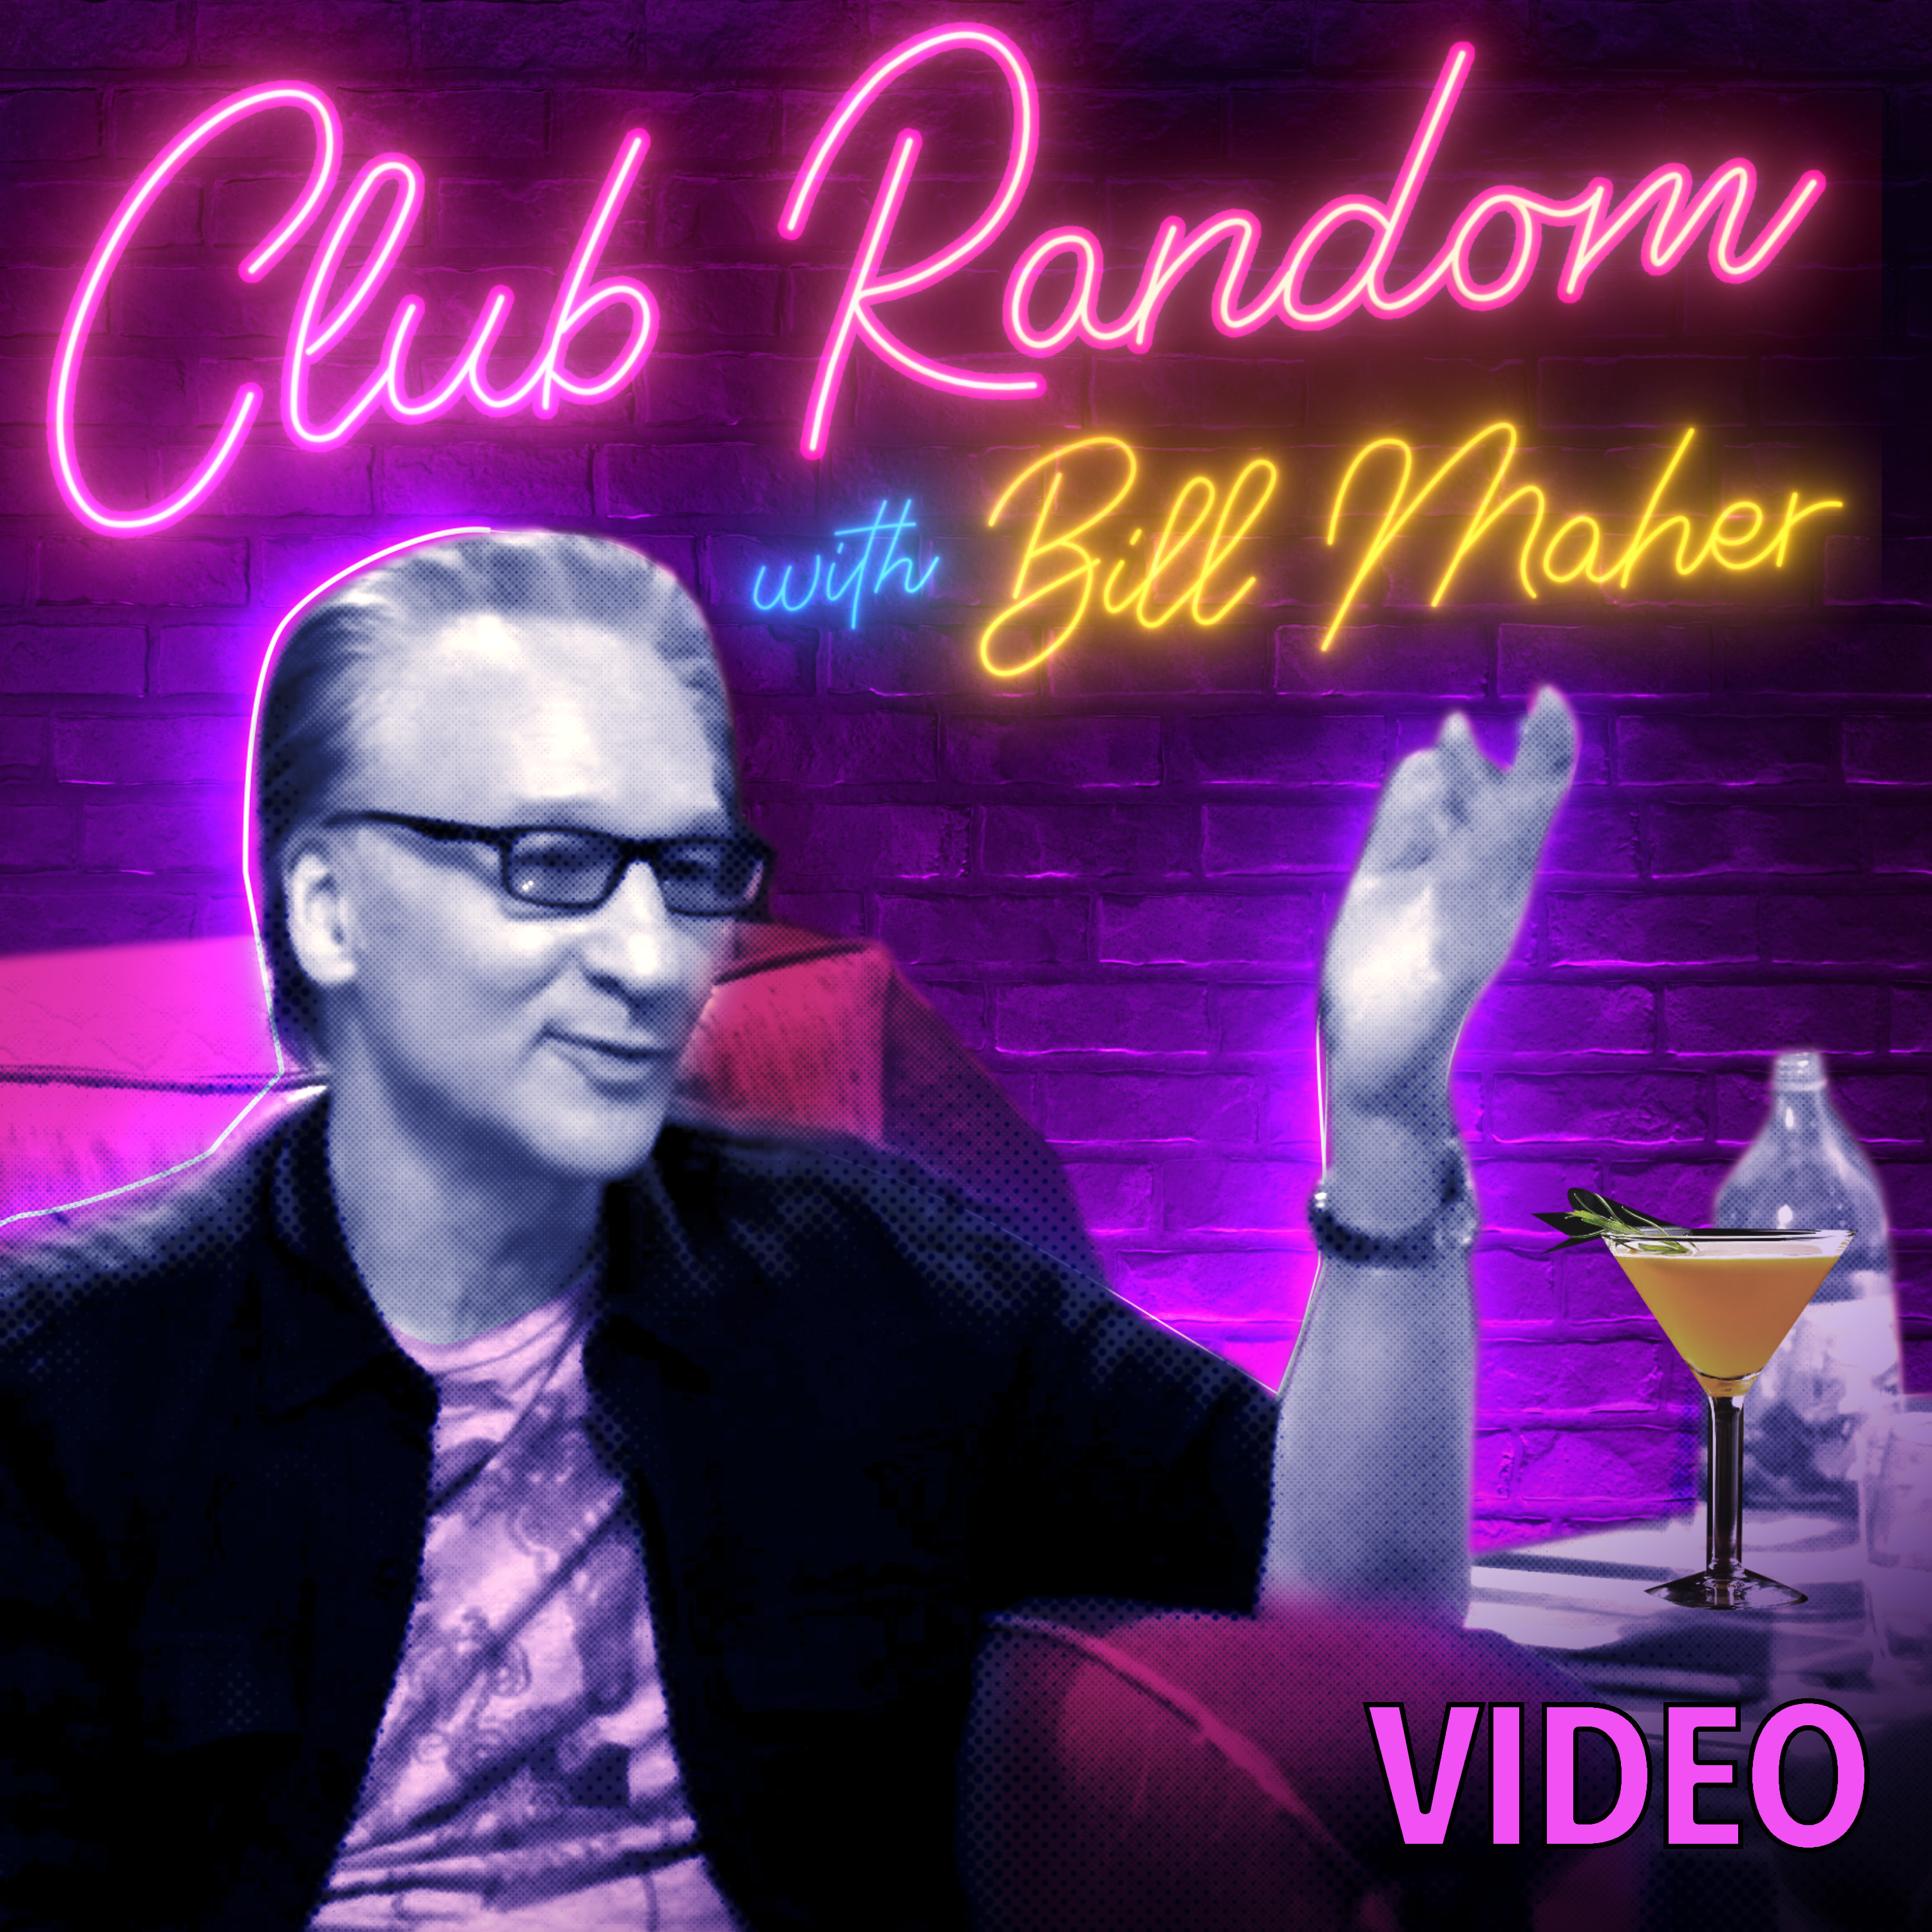 Video: John Cleese | Club Random with Bill Maher